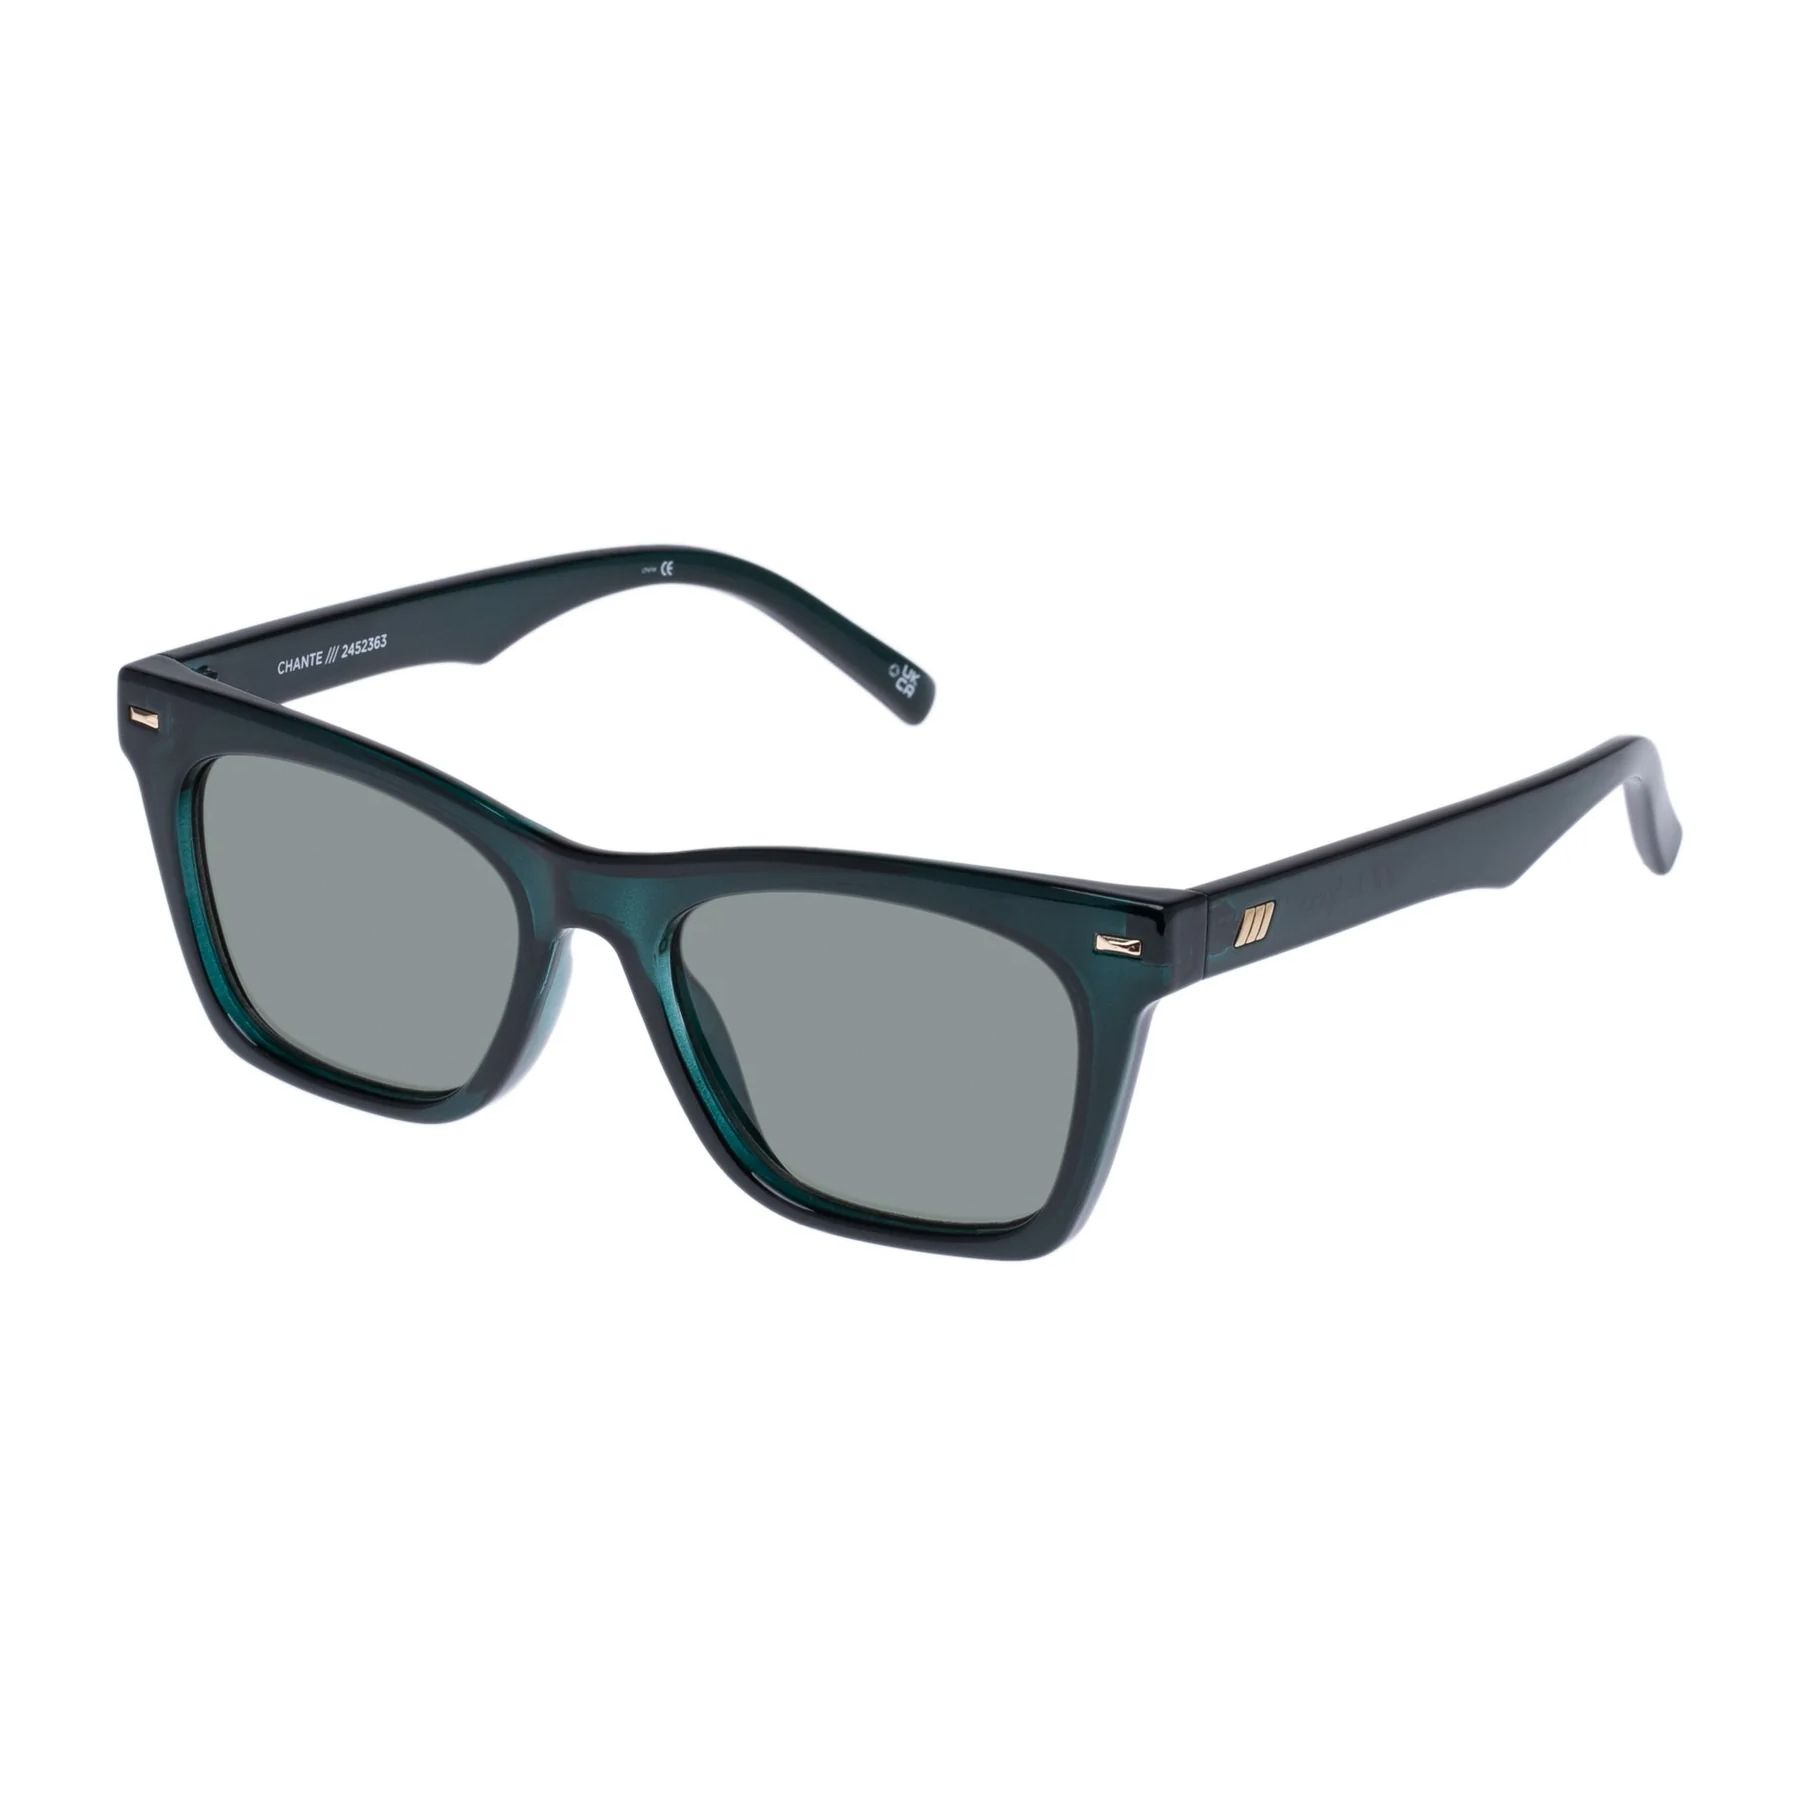 CHANTE Cateye Sunglasses DARK BOTTLE GREEN - size 53